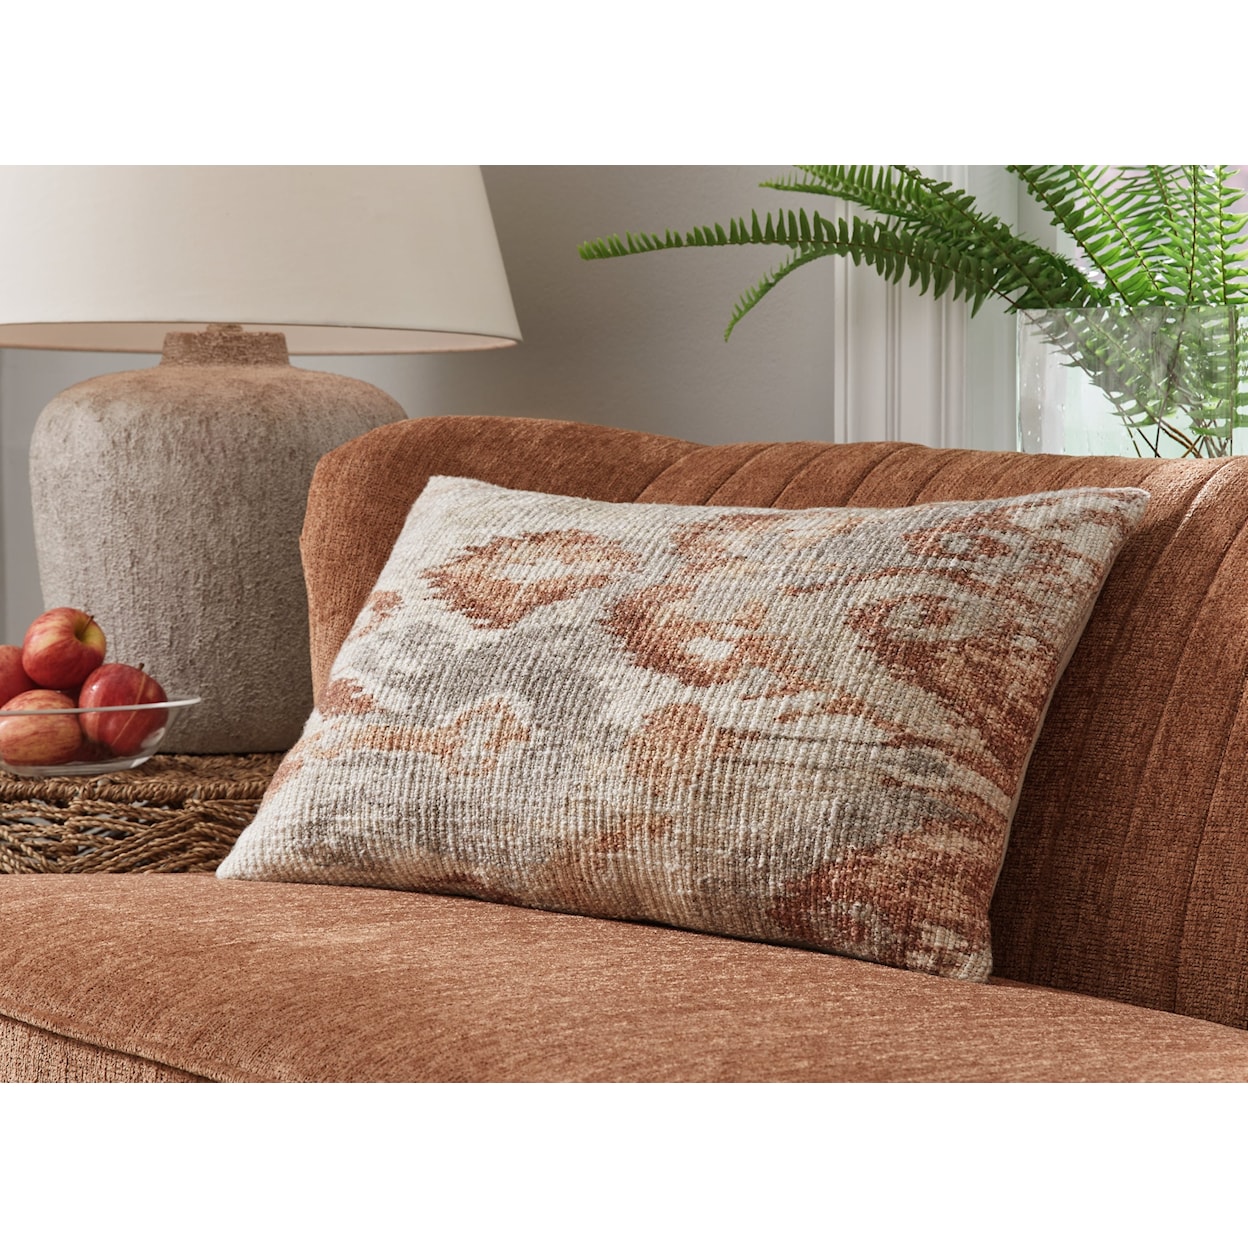 Ashley Furniture Signature Design Aprover Pillow